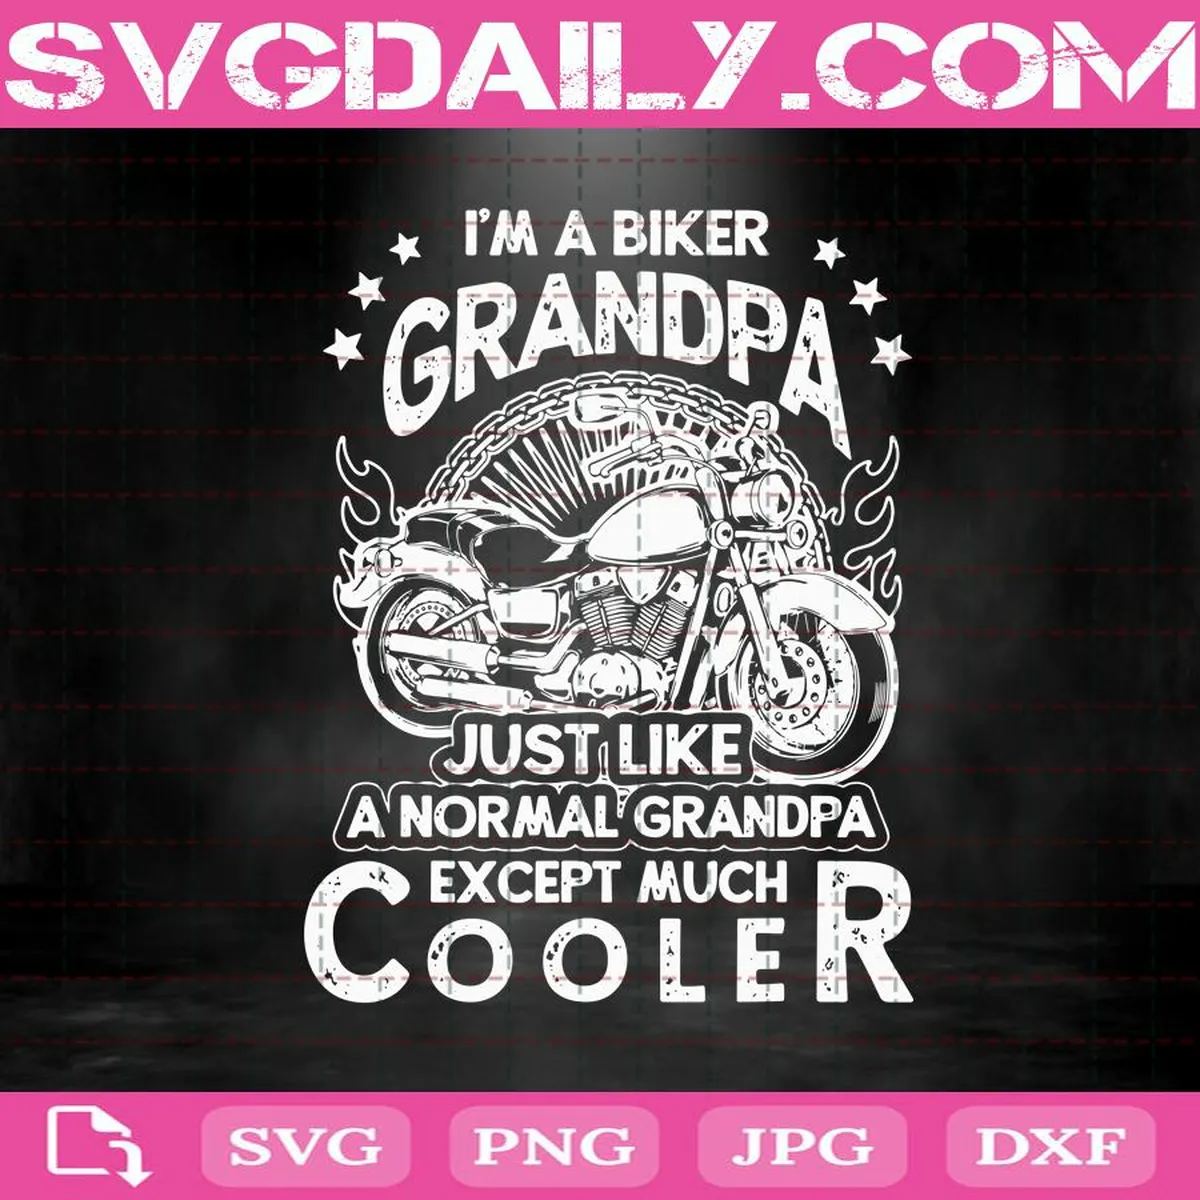 Im A Biker Grandpa Just Like A Normal Grandpa Except Much Cooler Svg